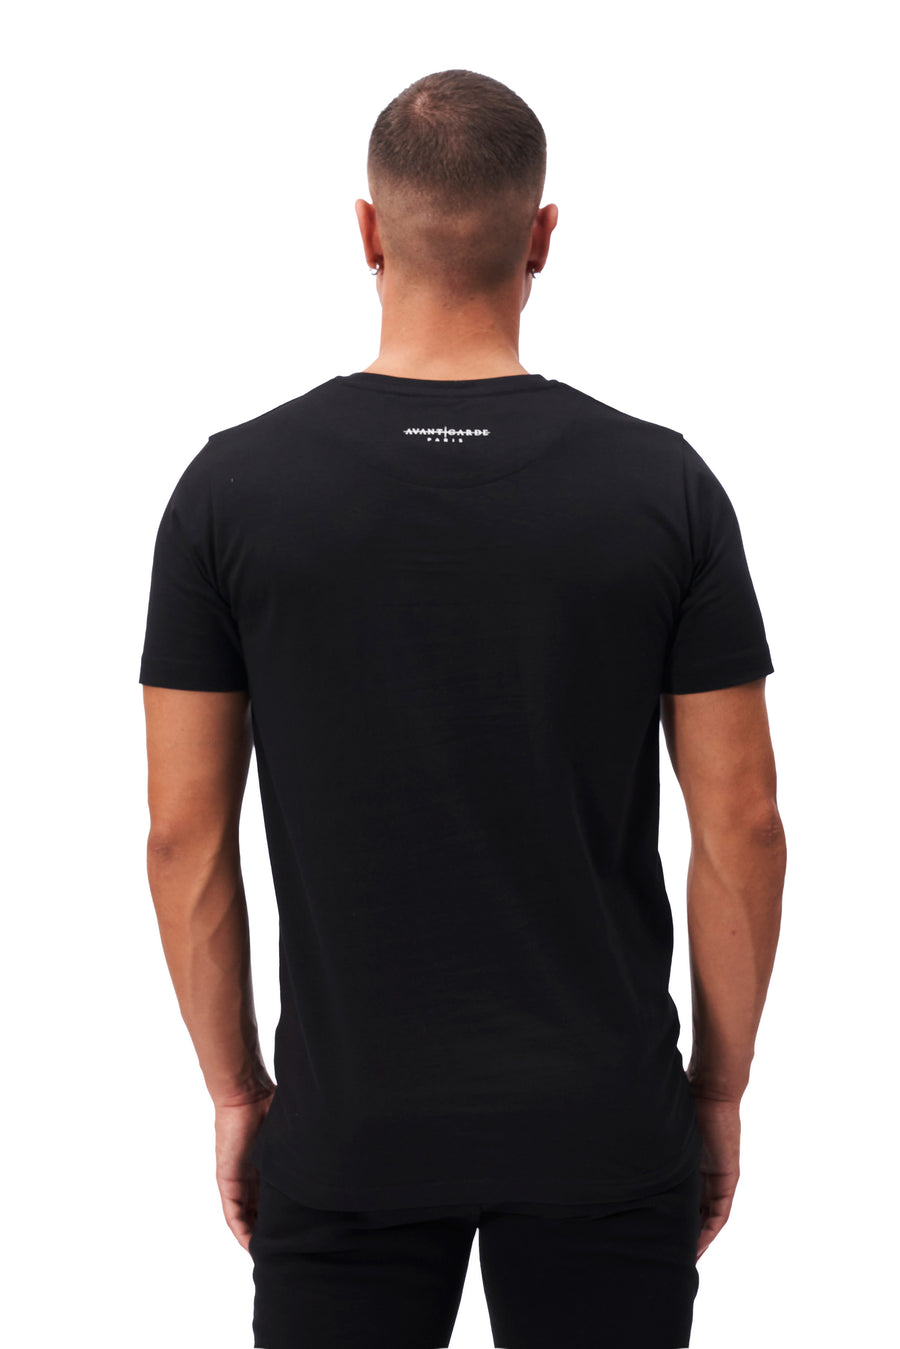 Criptic T-Shirt in Black